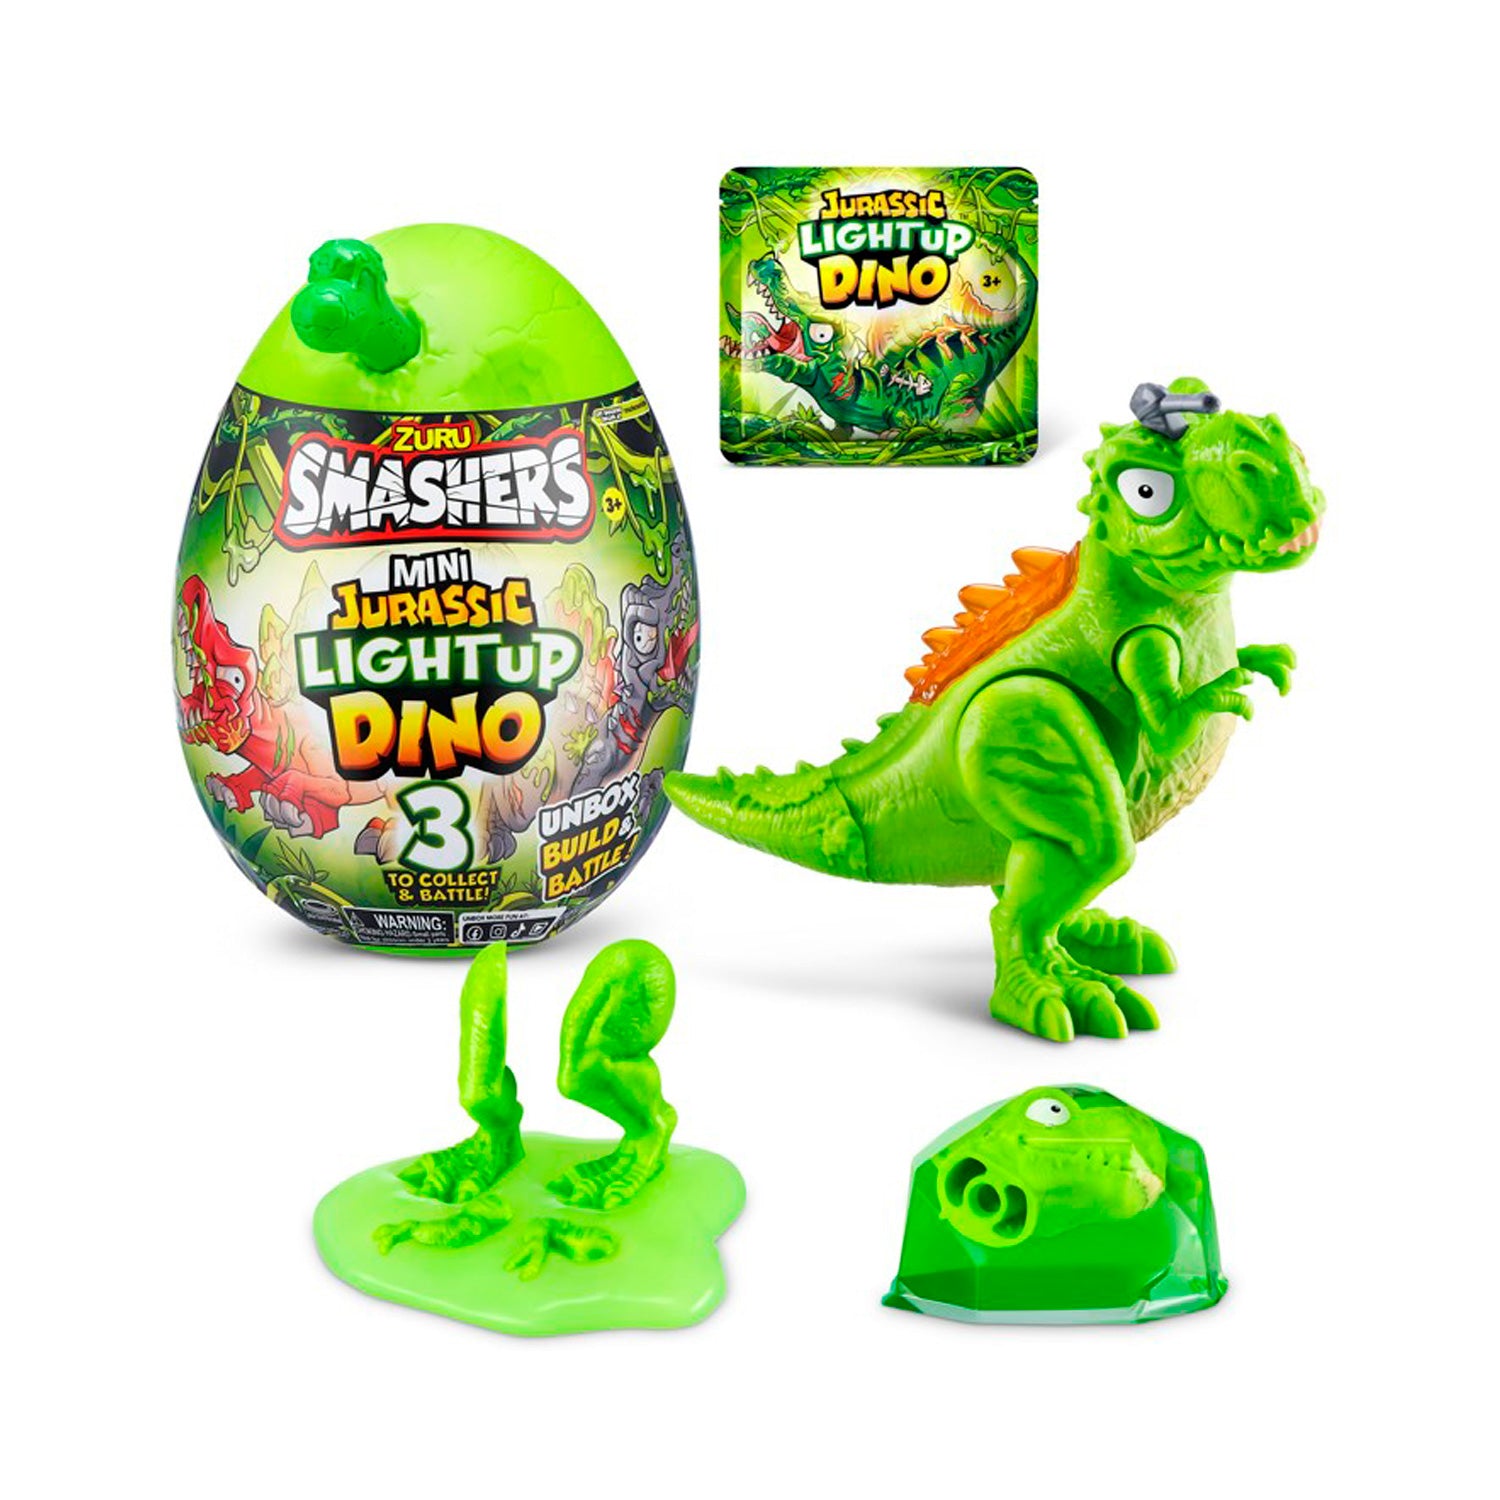 Smashers Mini Jurassic Light Up Dino - Fun